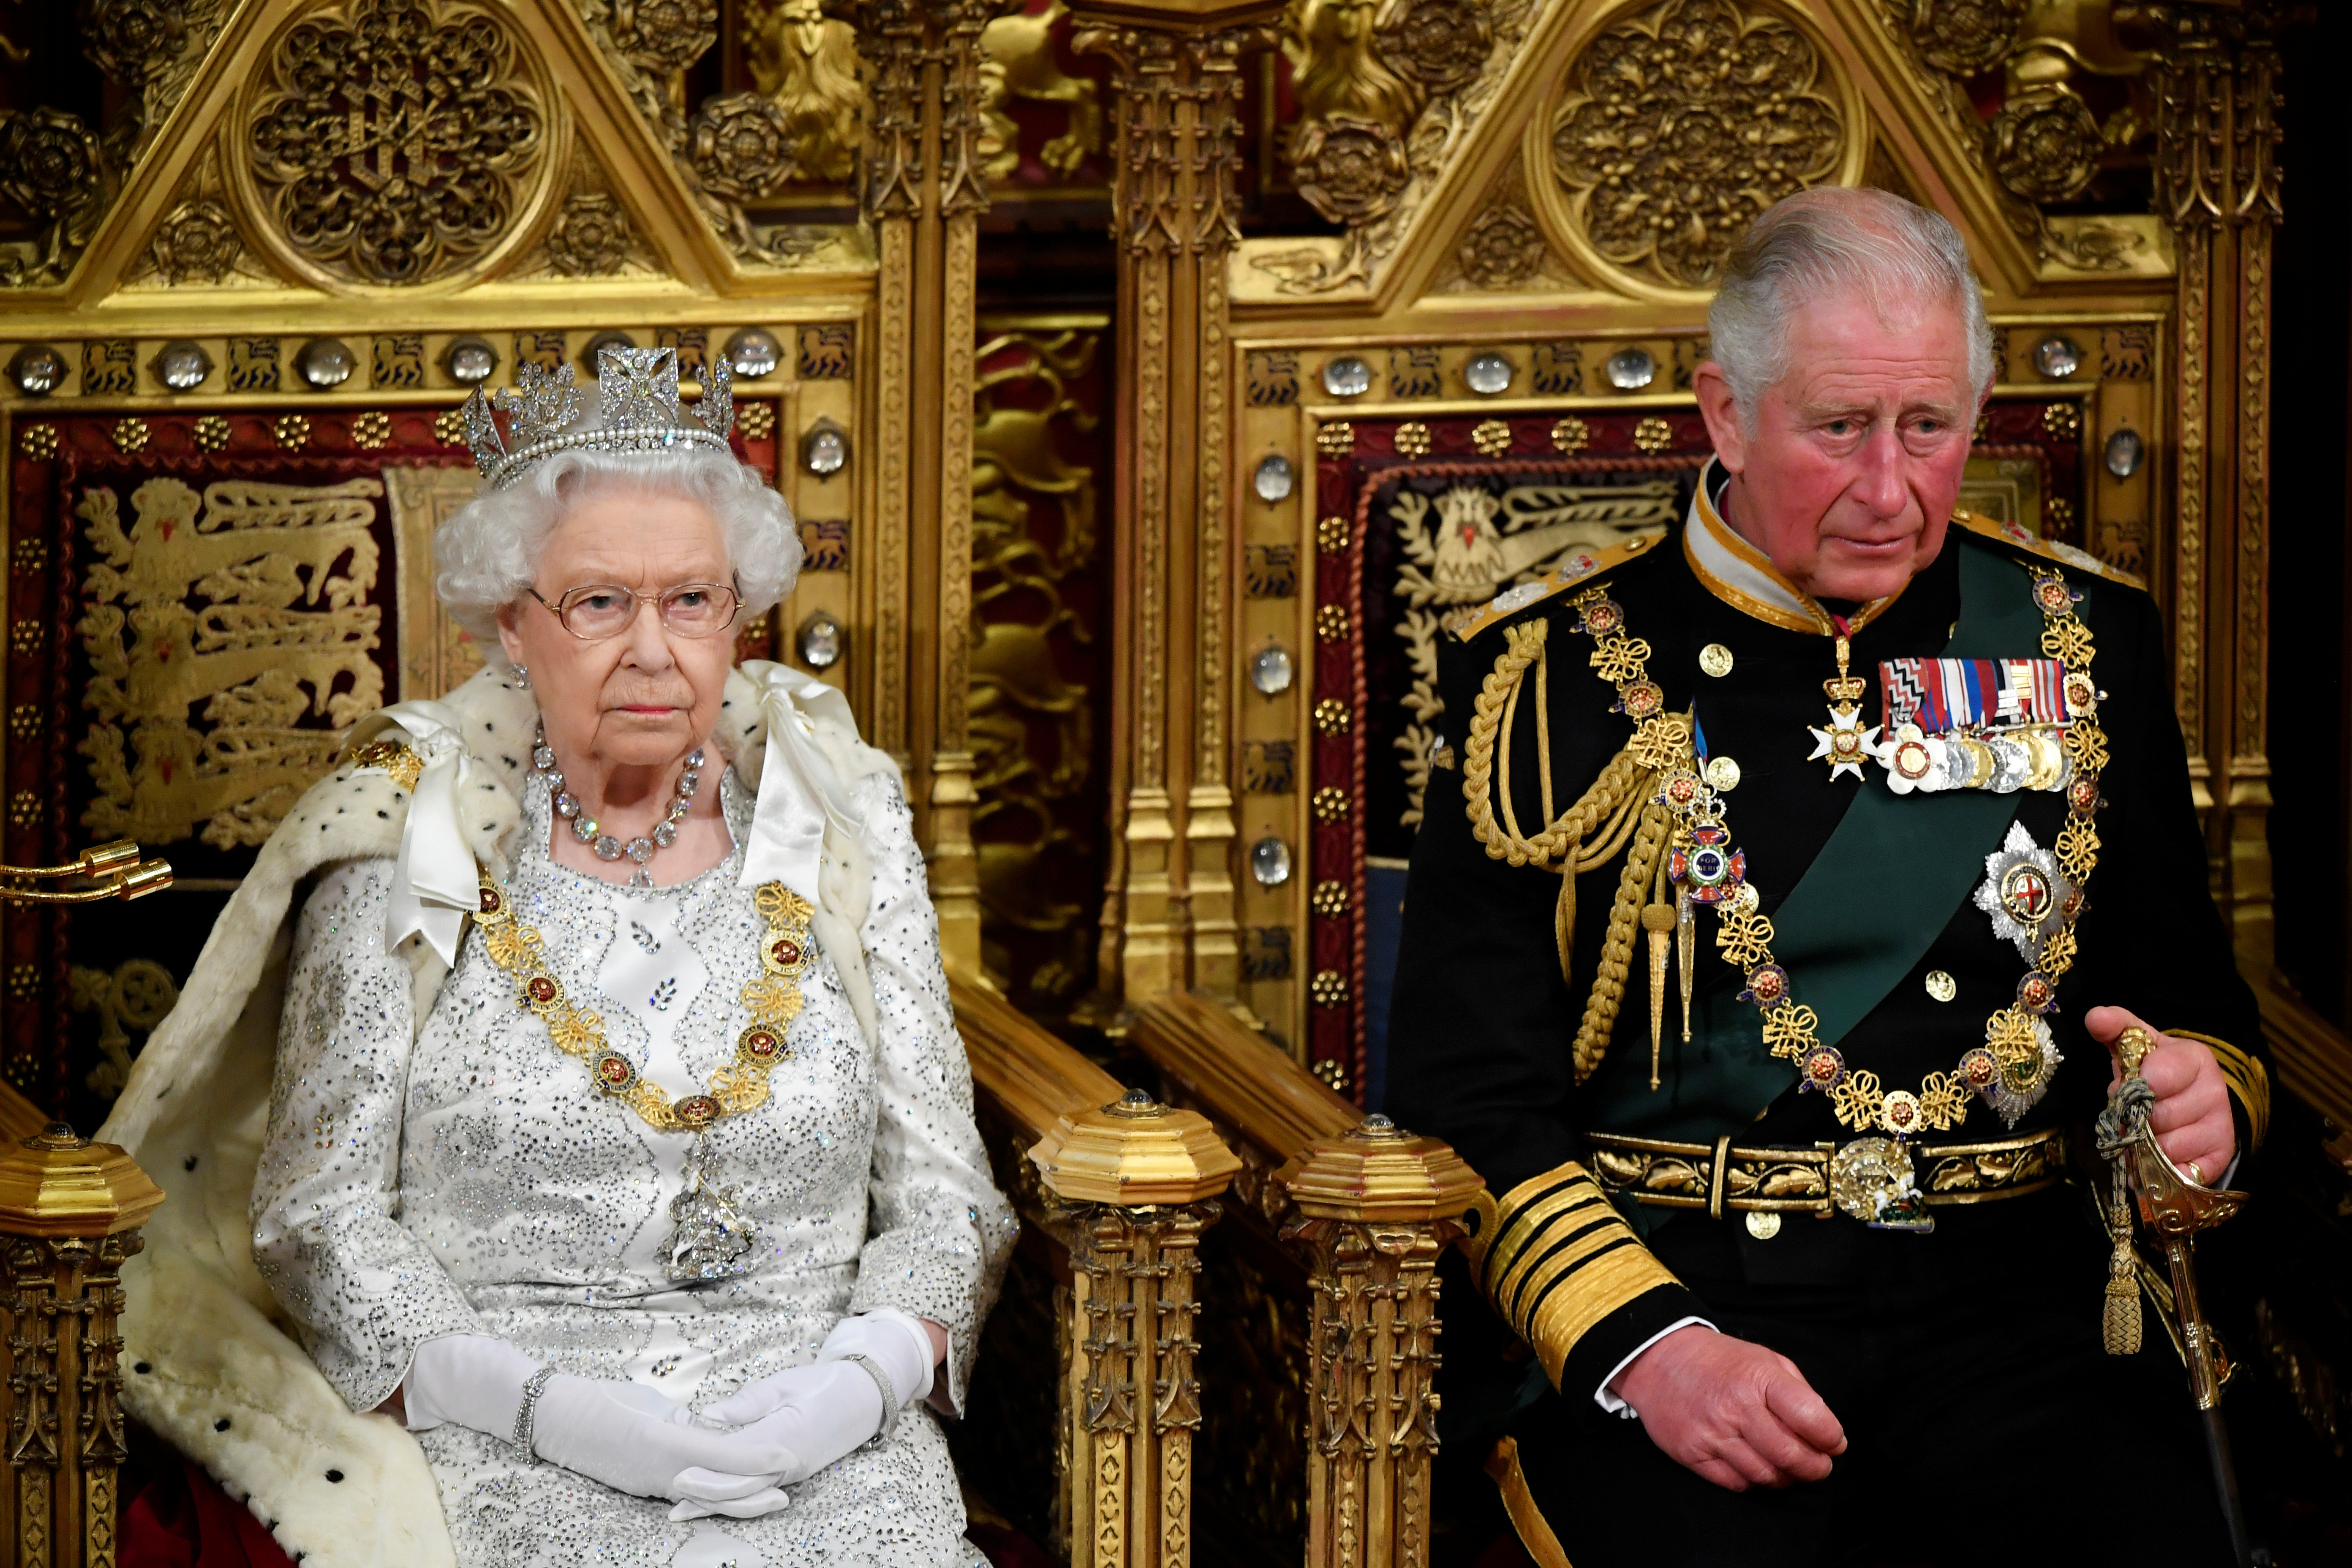 HM Queen Elizabeth II and Prince Philip, Duke of Edinburgh